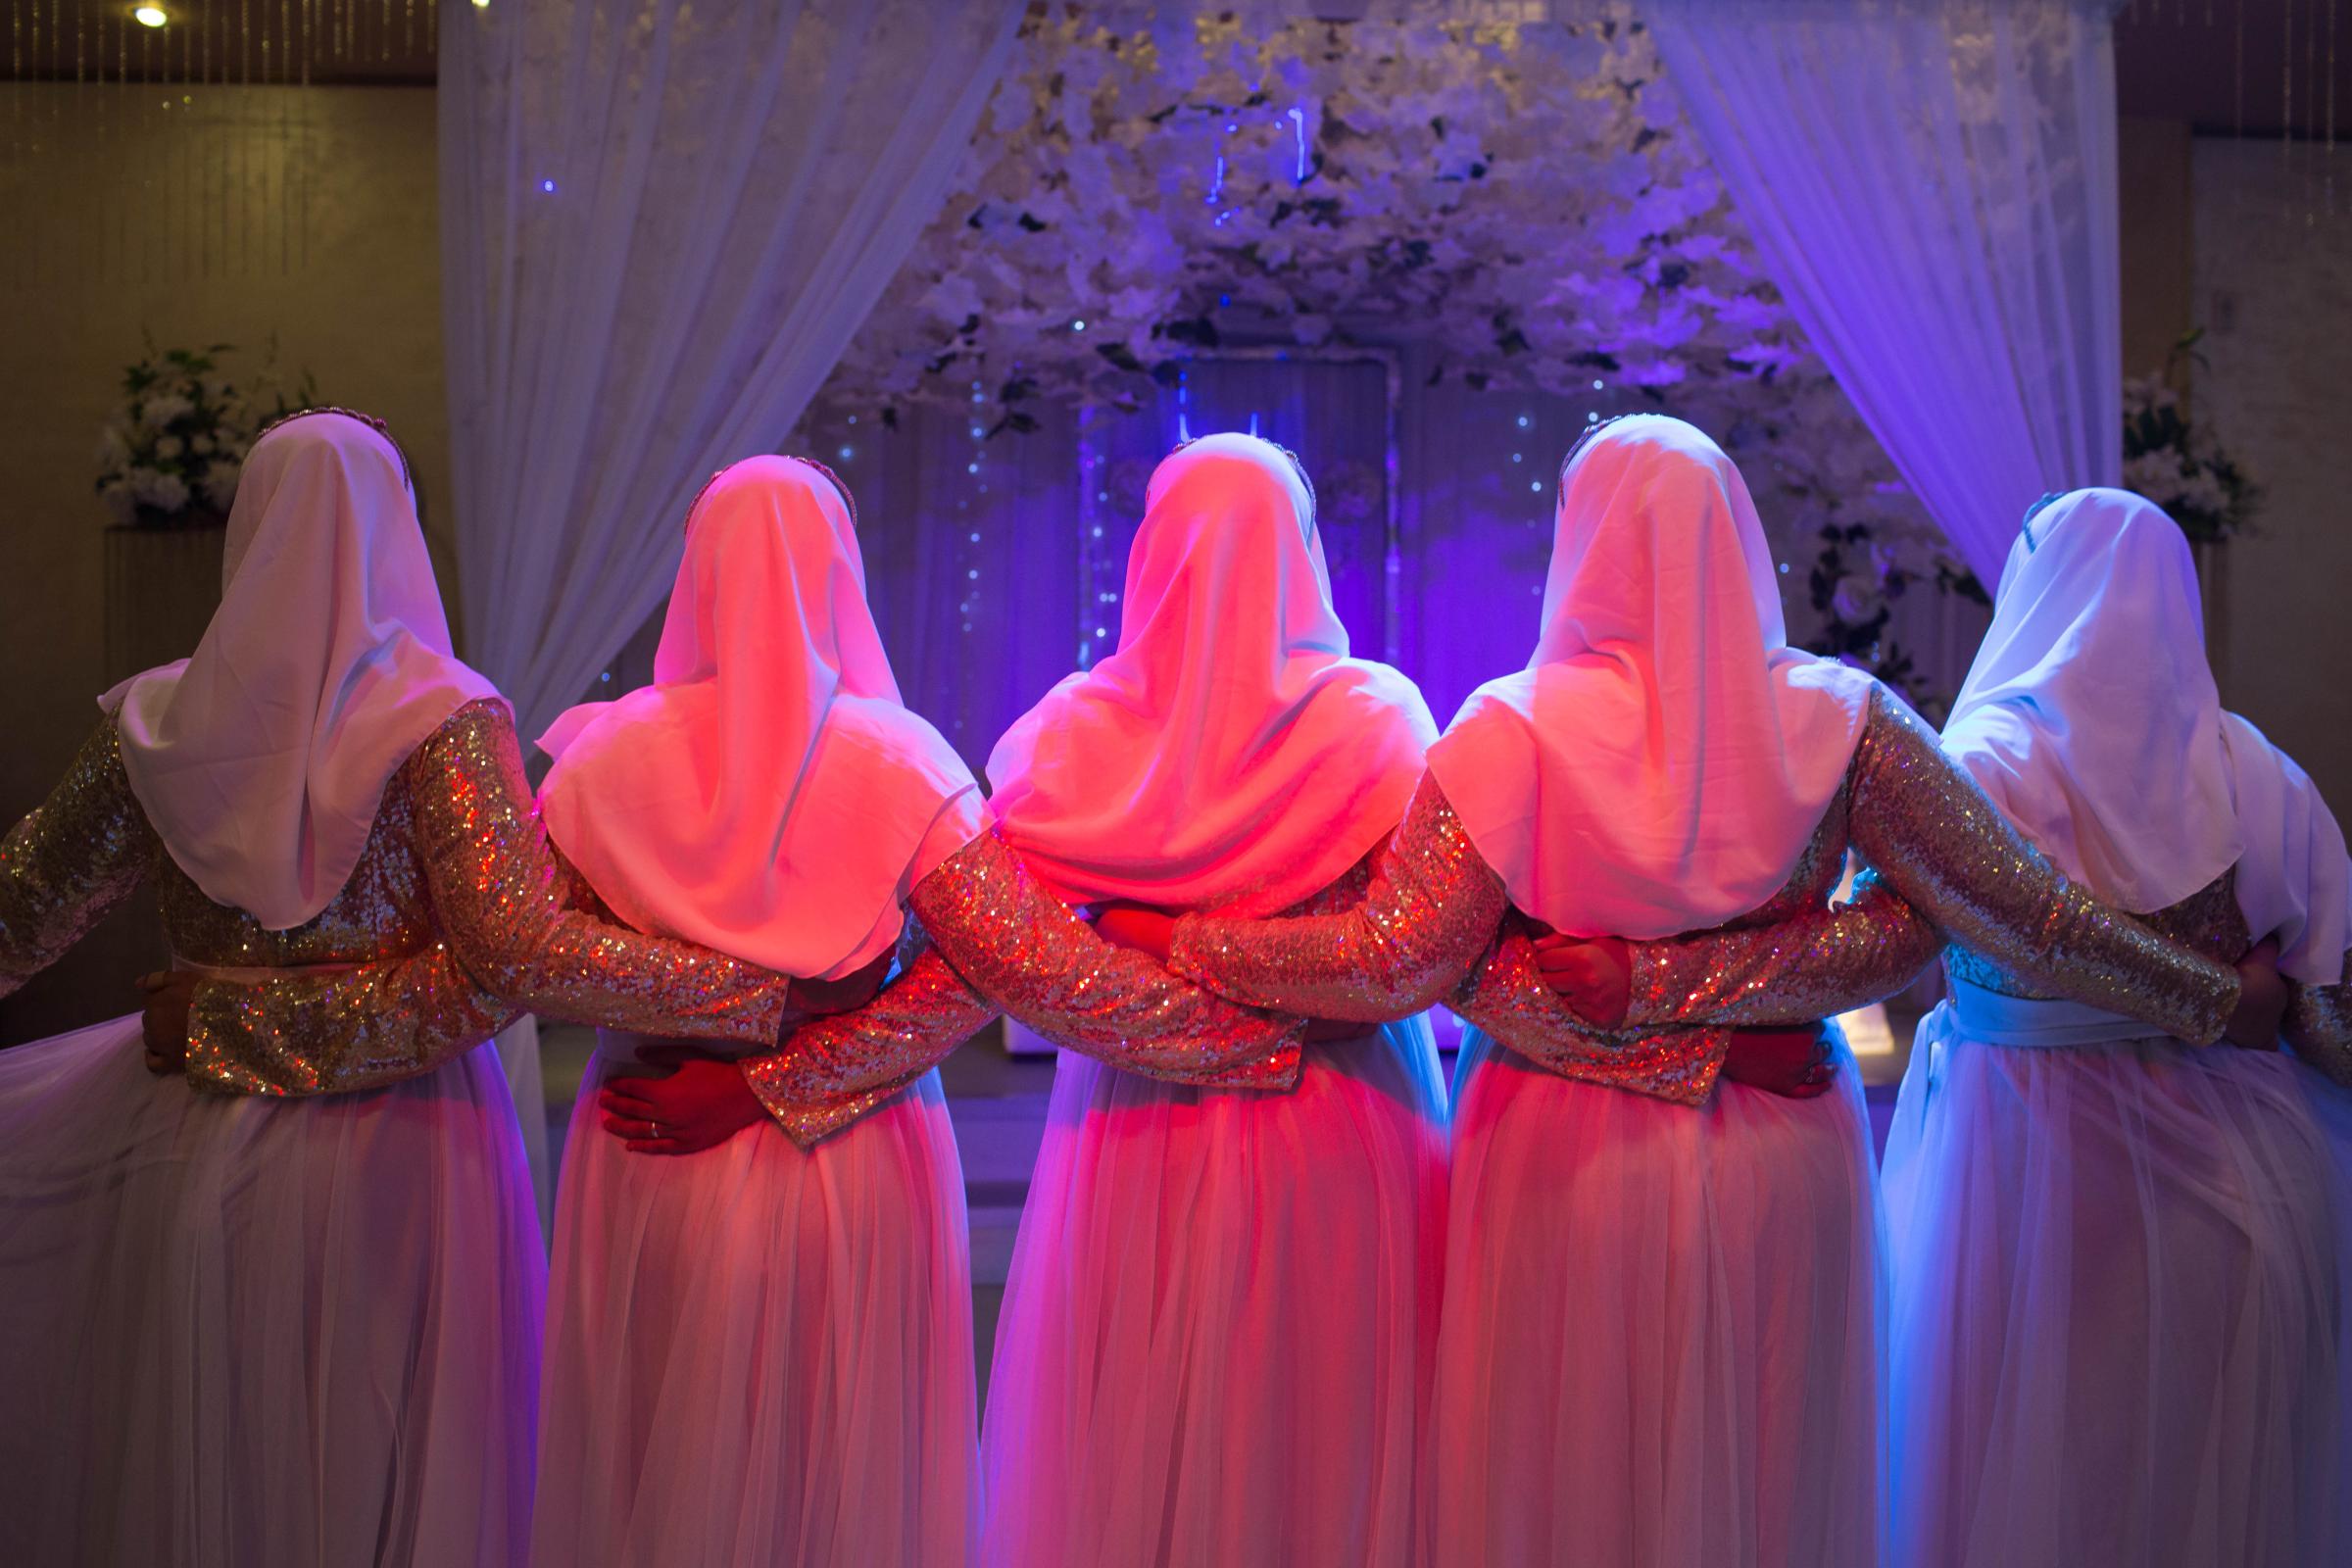 Islamic women's wedding band - 